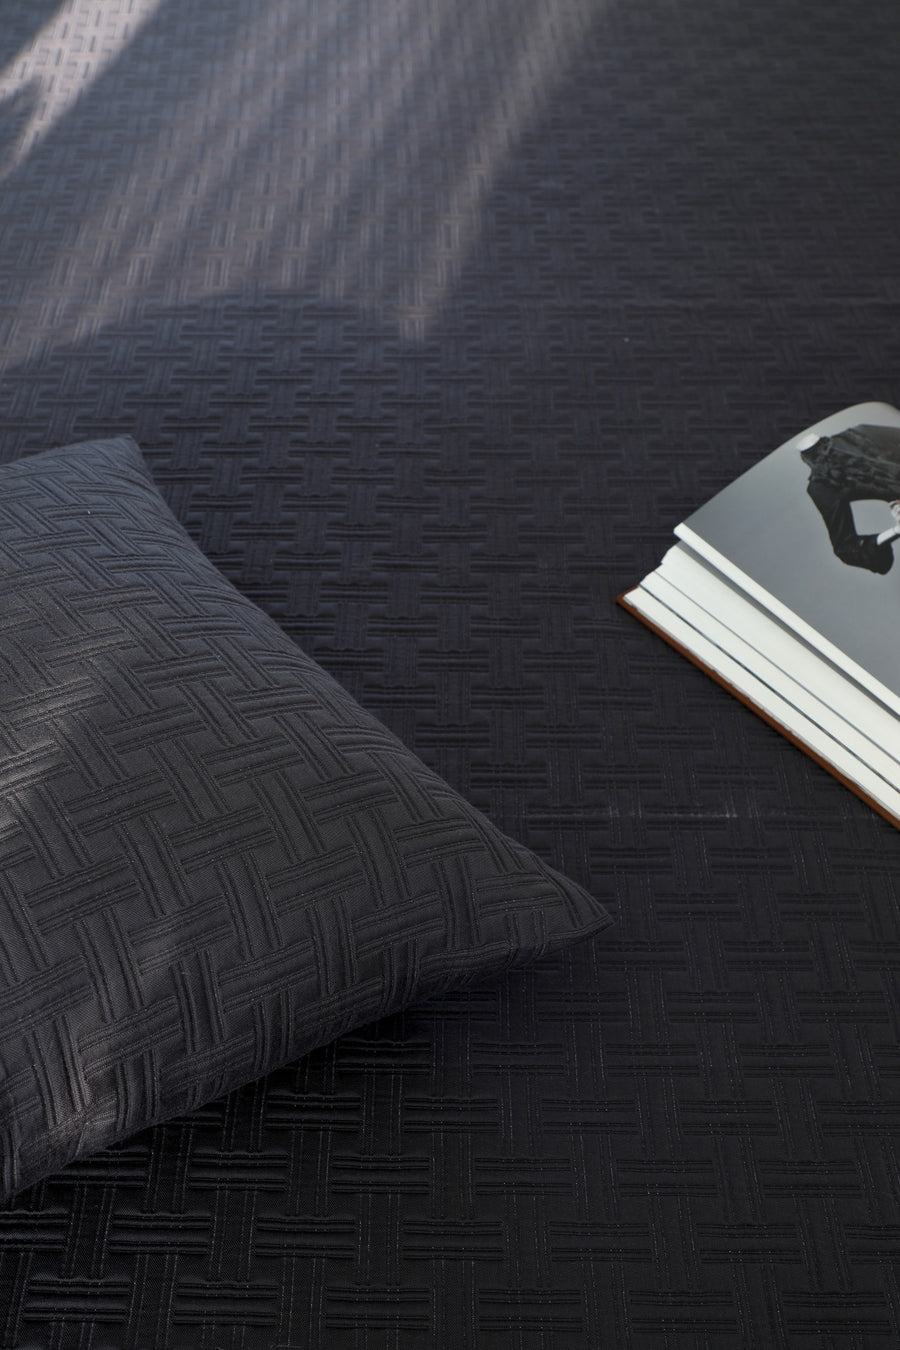 Waft weave  Charcoal Bedspread Set